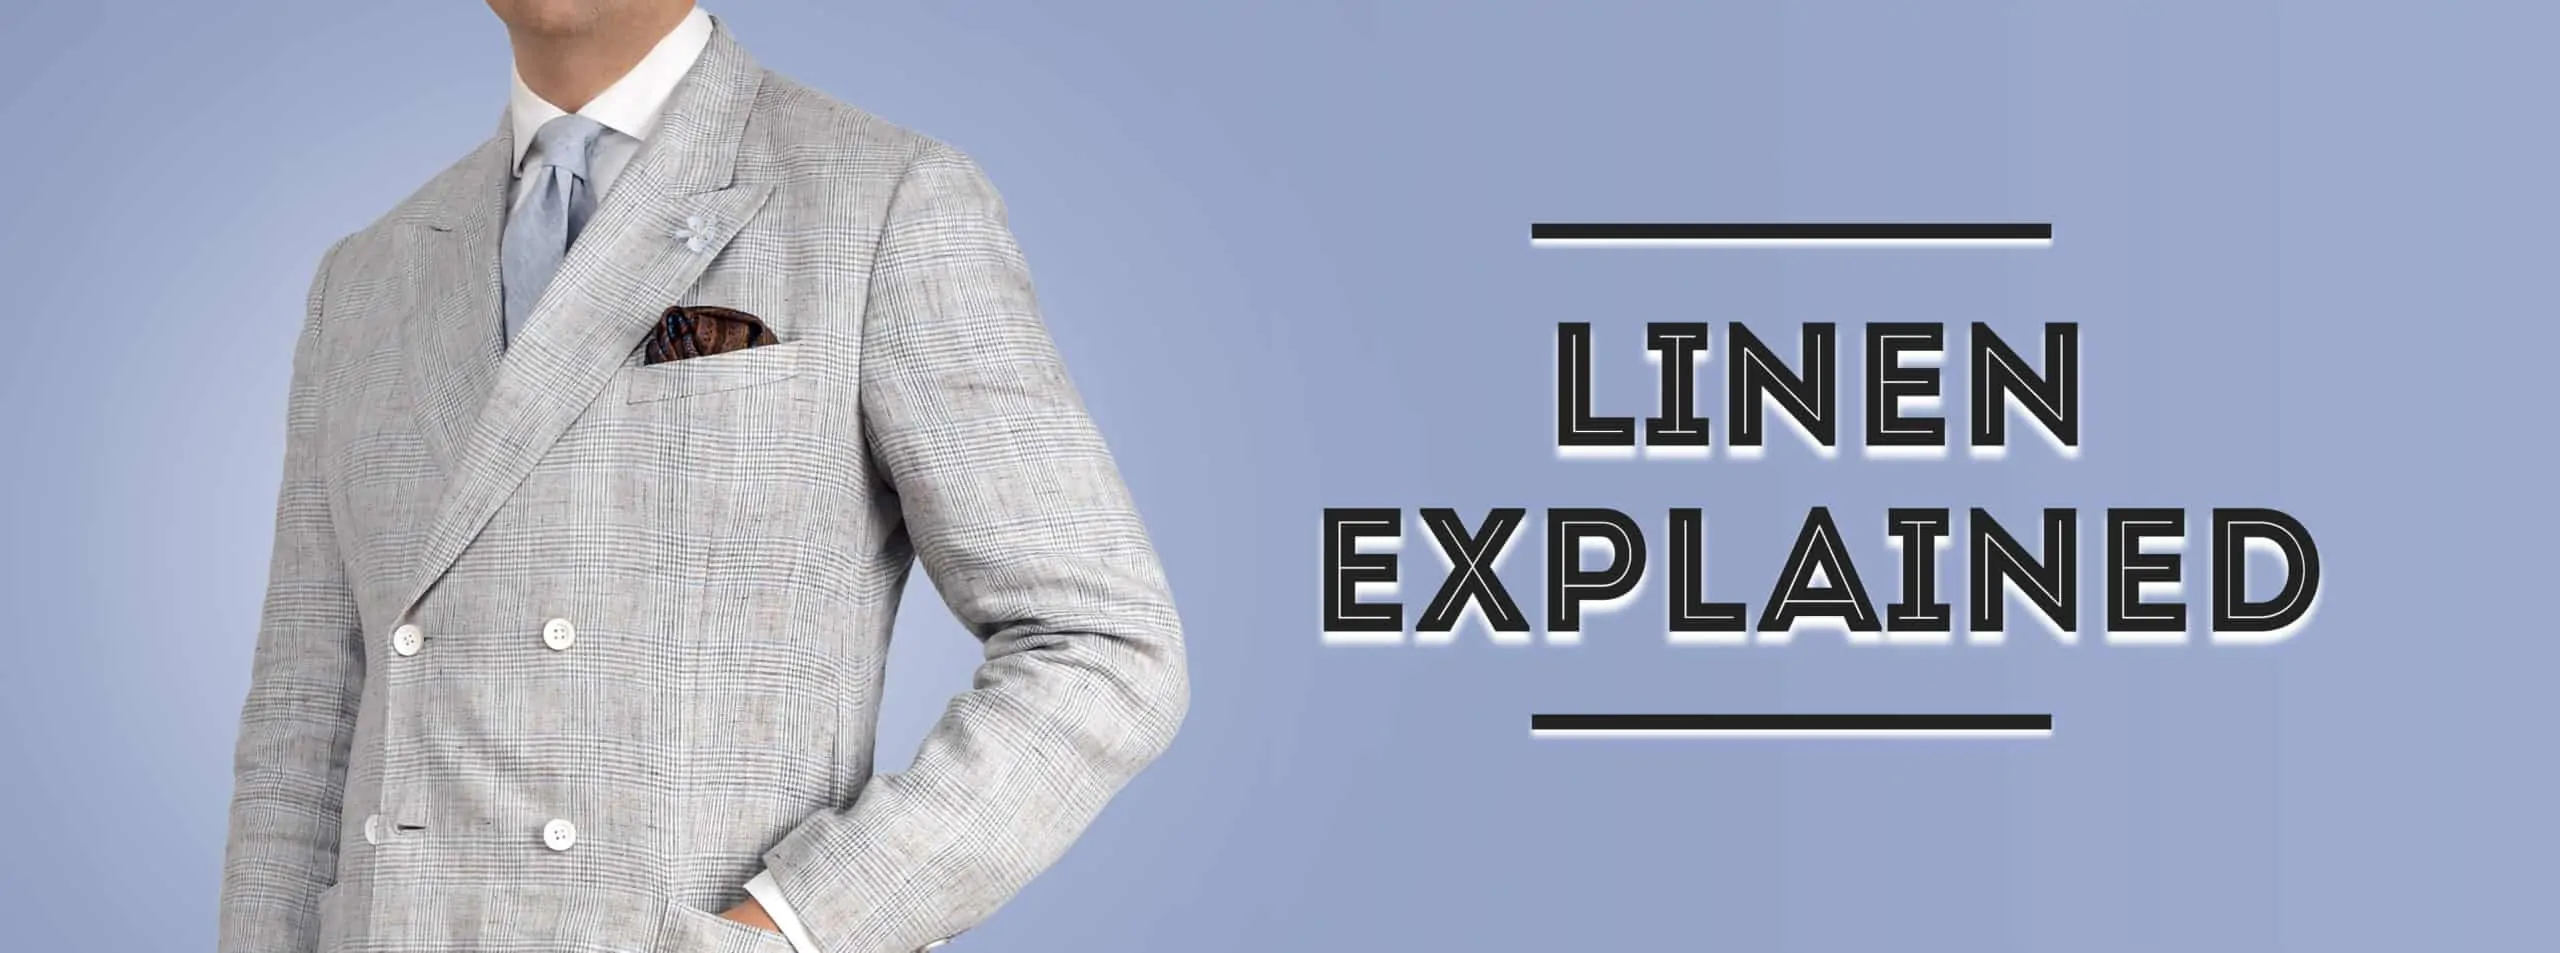 Linen Explained – Men’s Summer Fabric Guide